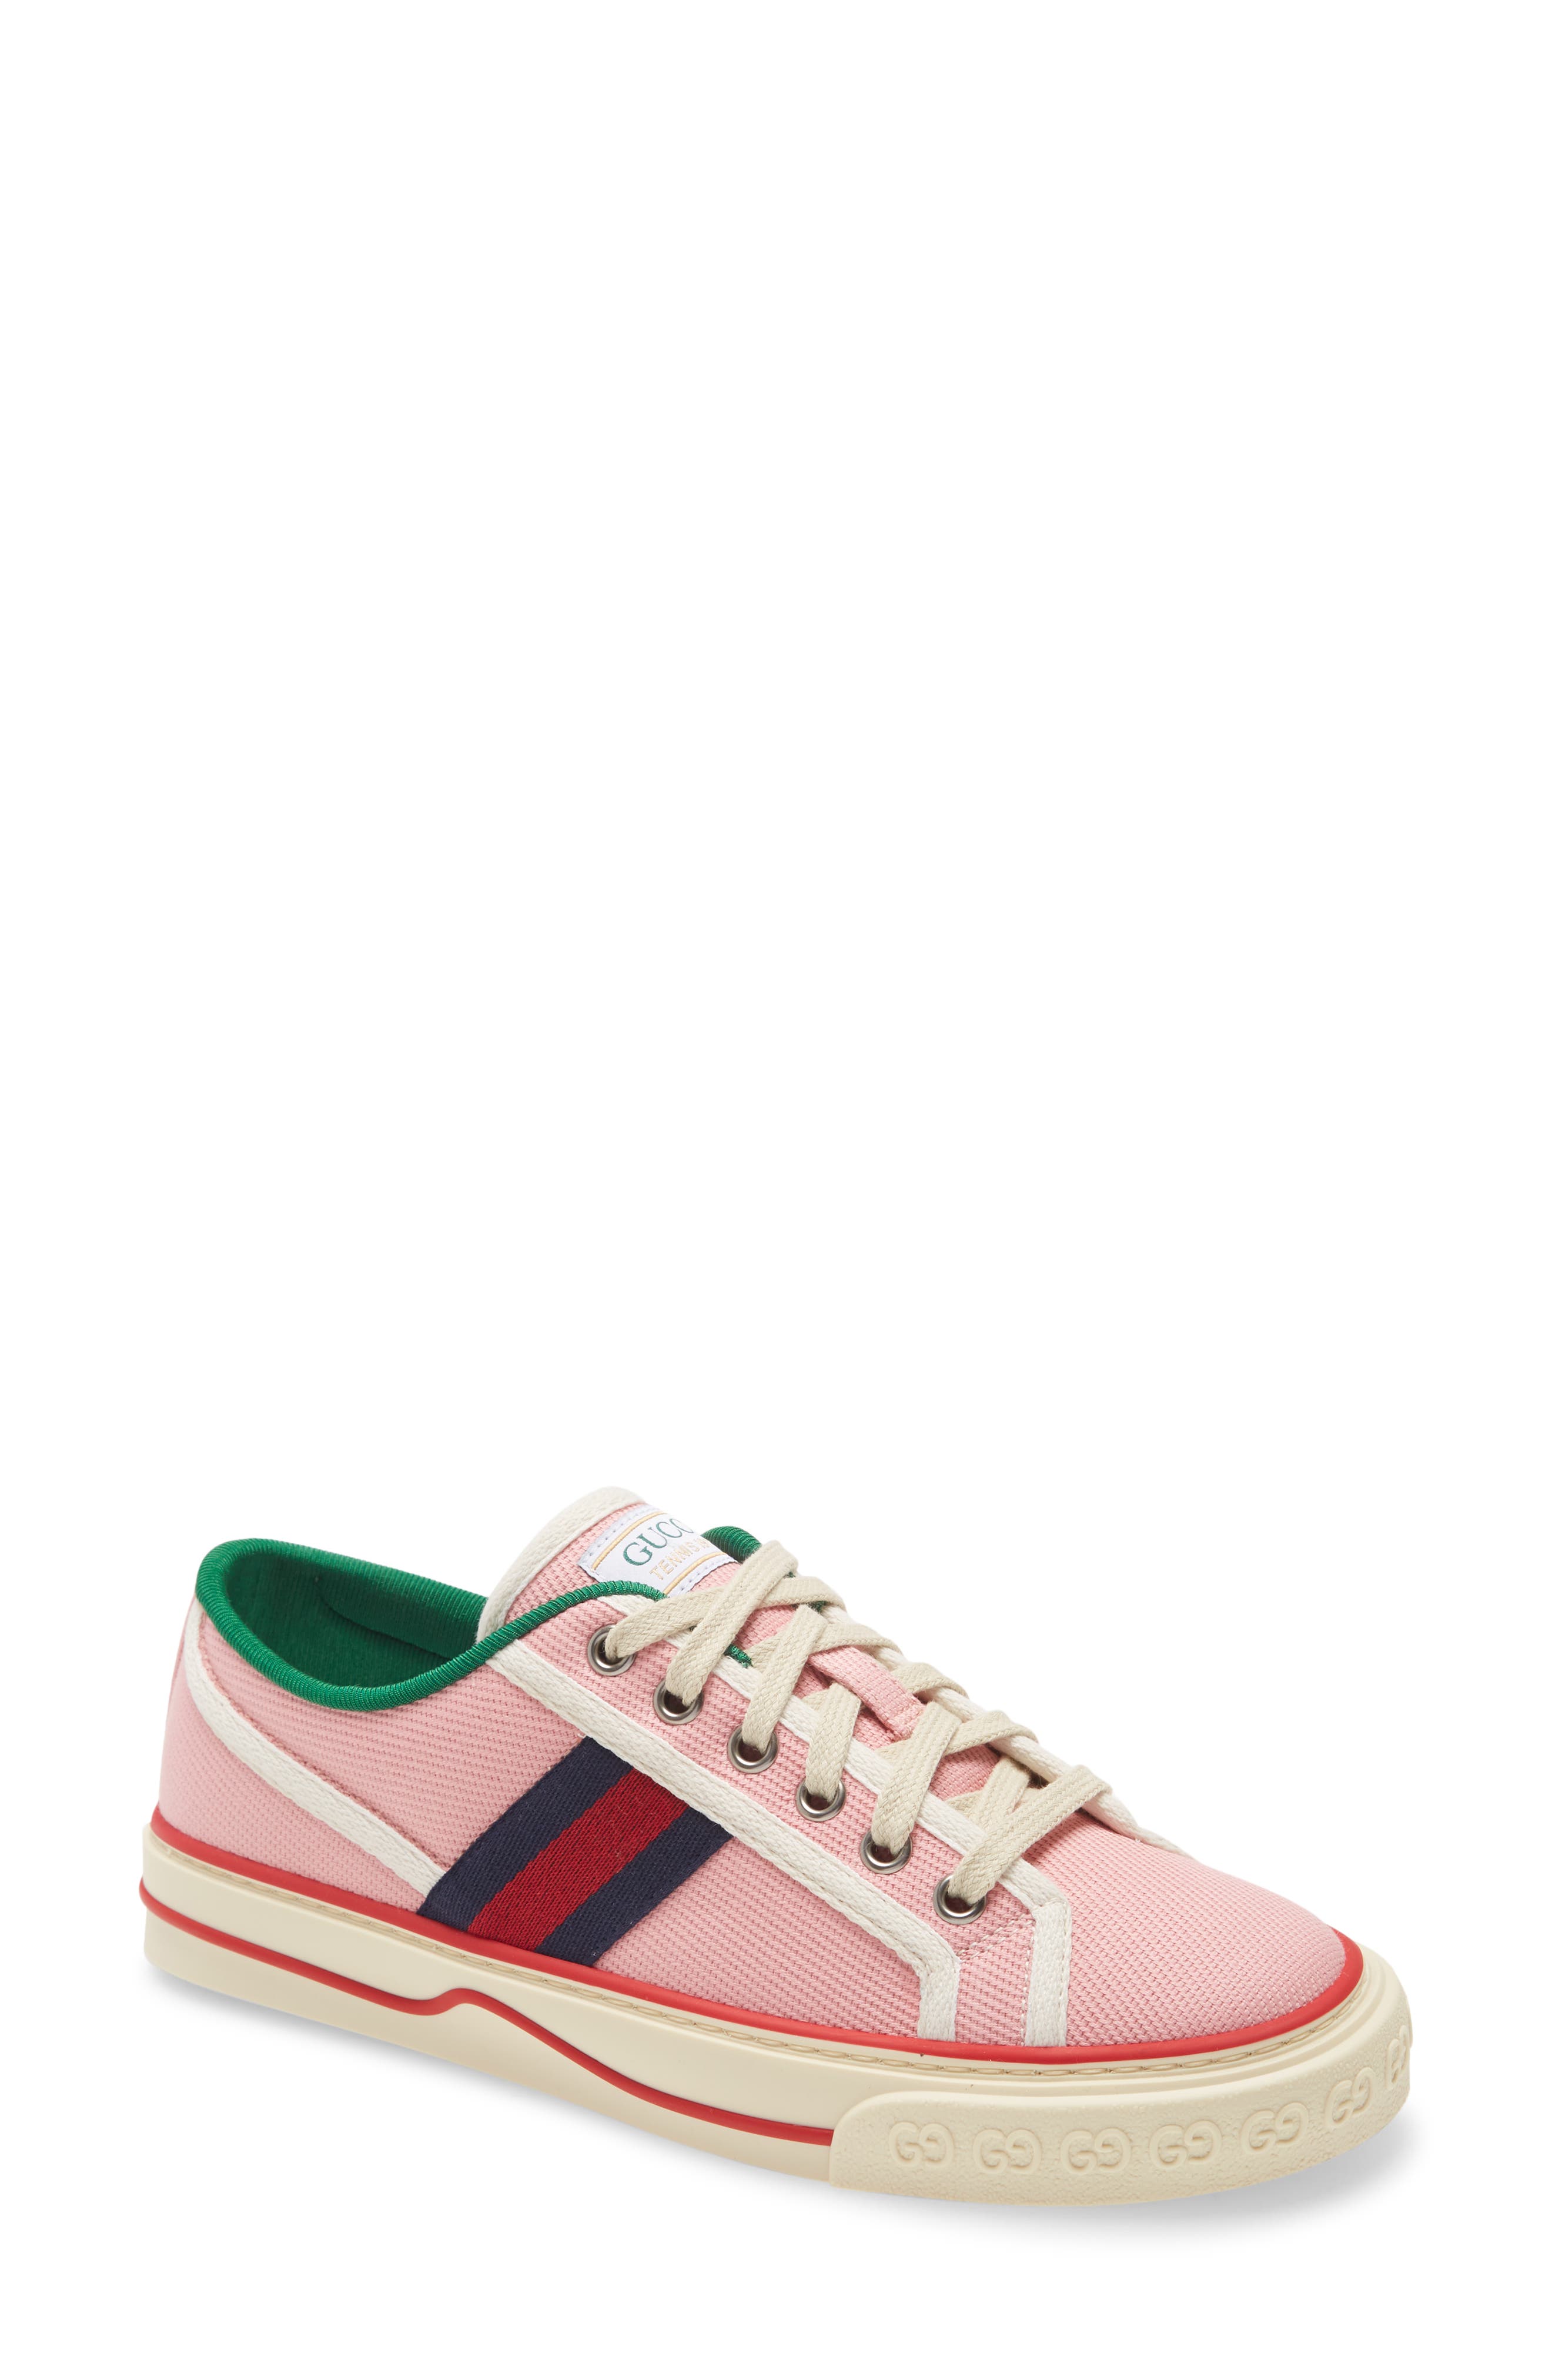 gucci shoes women pink